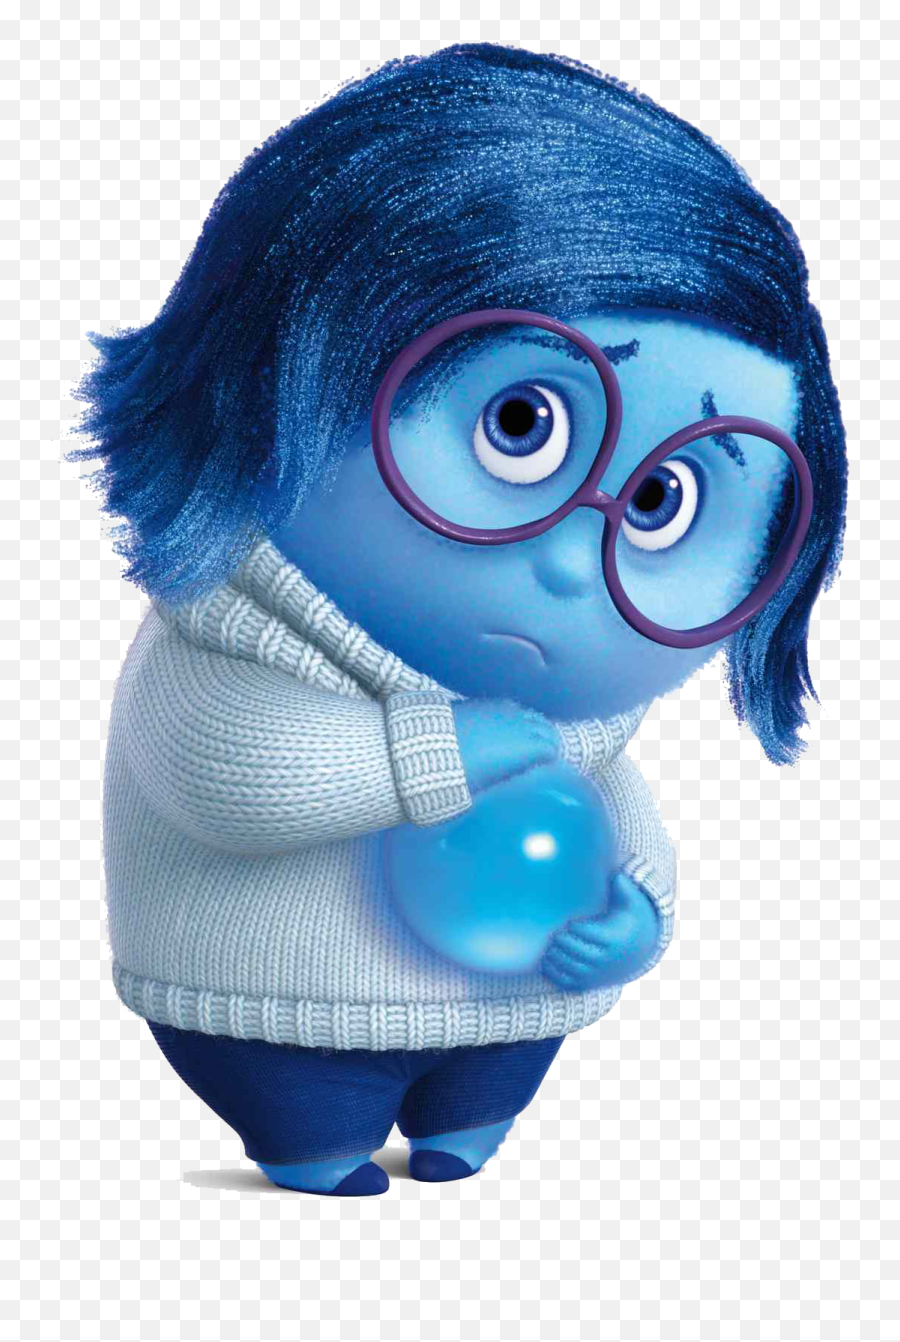 Sadness Disney Pixar Inside Out Emotion - Joy Sadness Inside Out Emoji,Inside Out Emotions Sadness